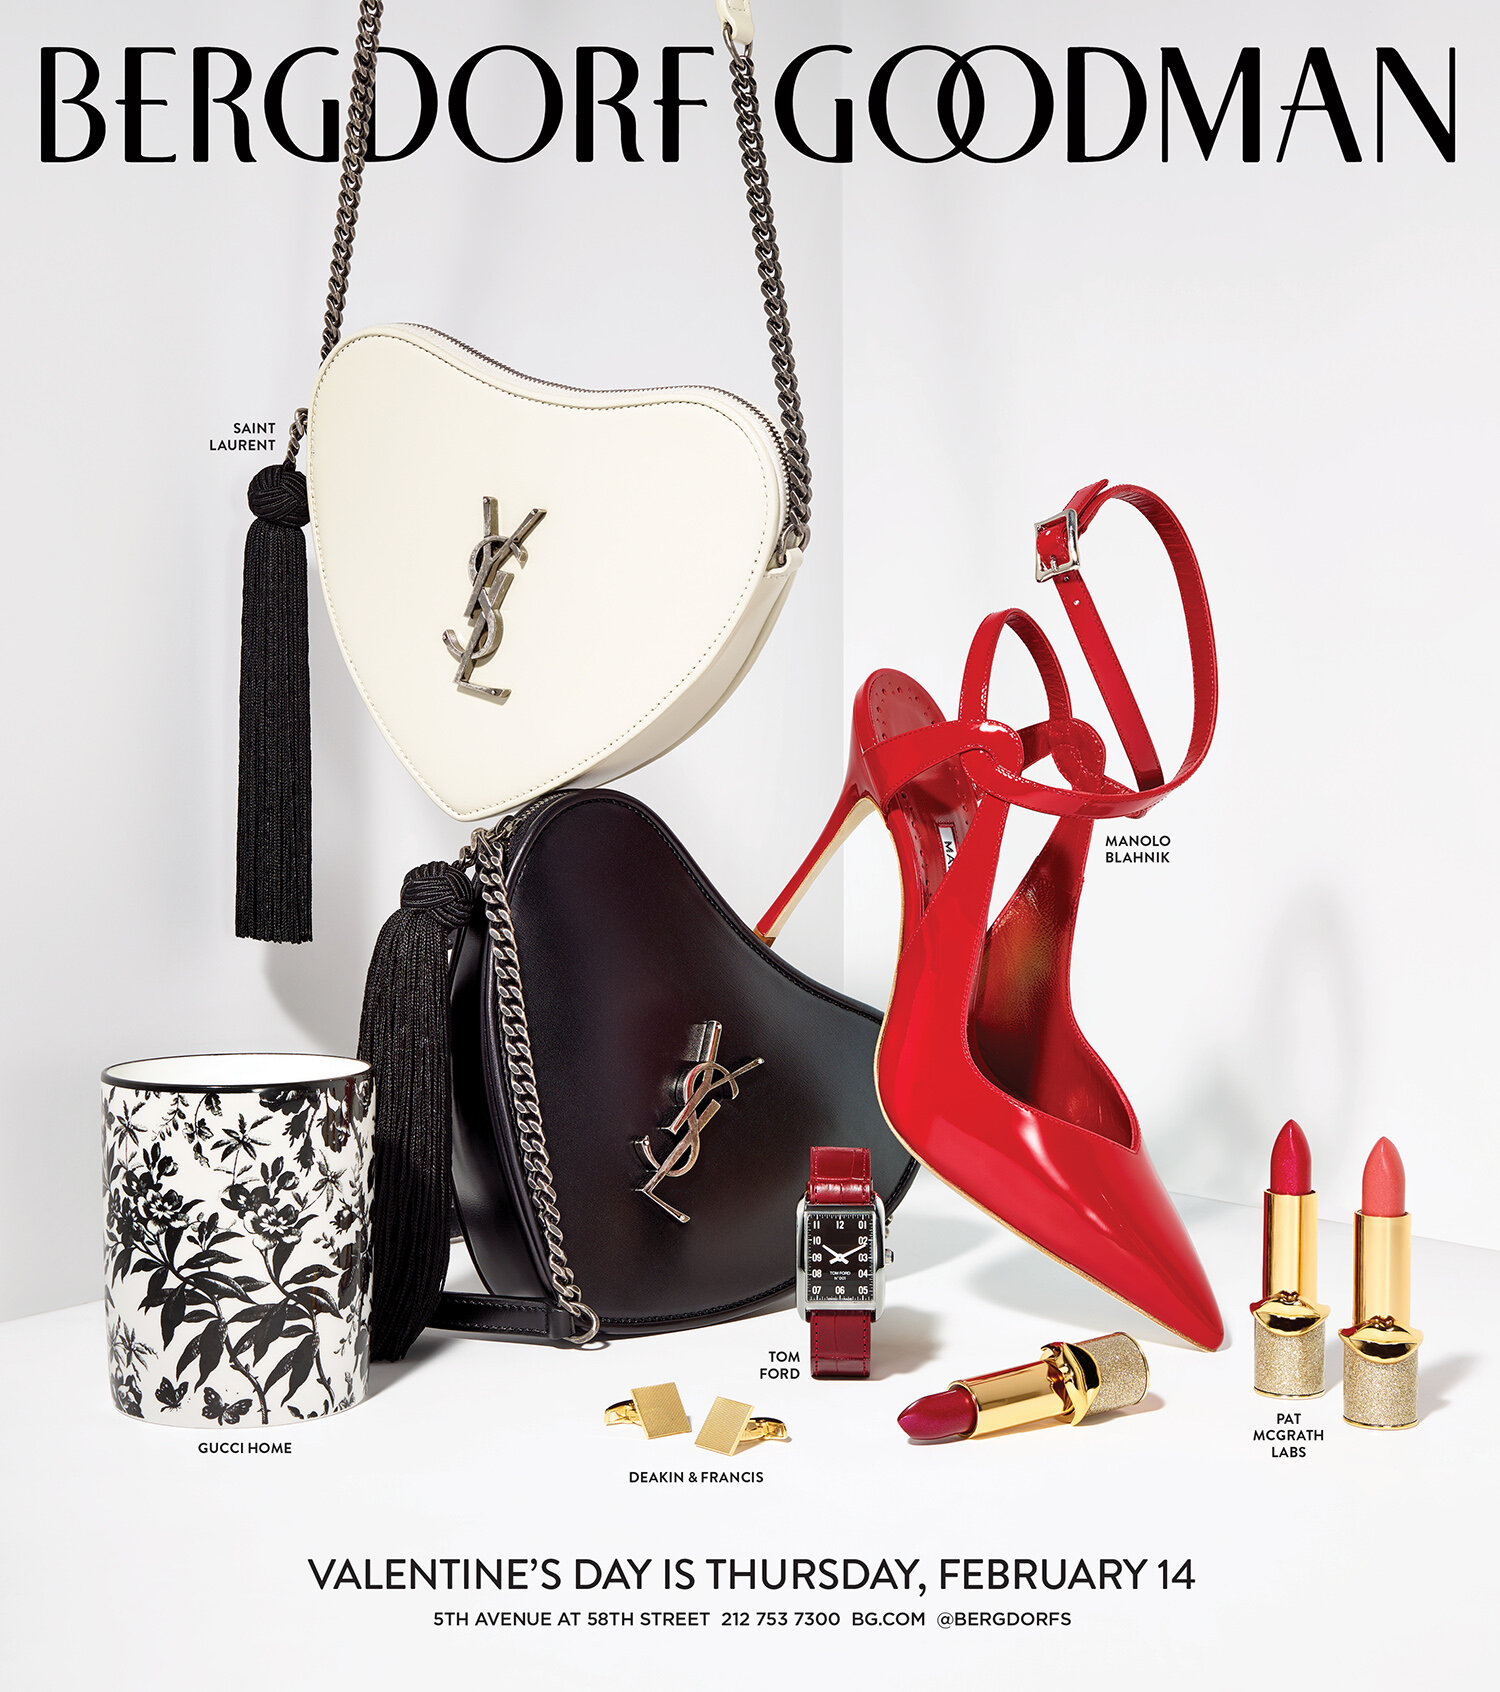  Advertisement for The New York Post celebrating Valentine’s Day. 9.75 x 11”. On-set Art Direction and Design. Photographer Jens Mortensen, Fashion Editor Jessica Minkoff. 